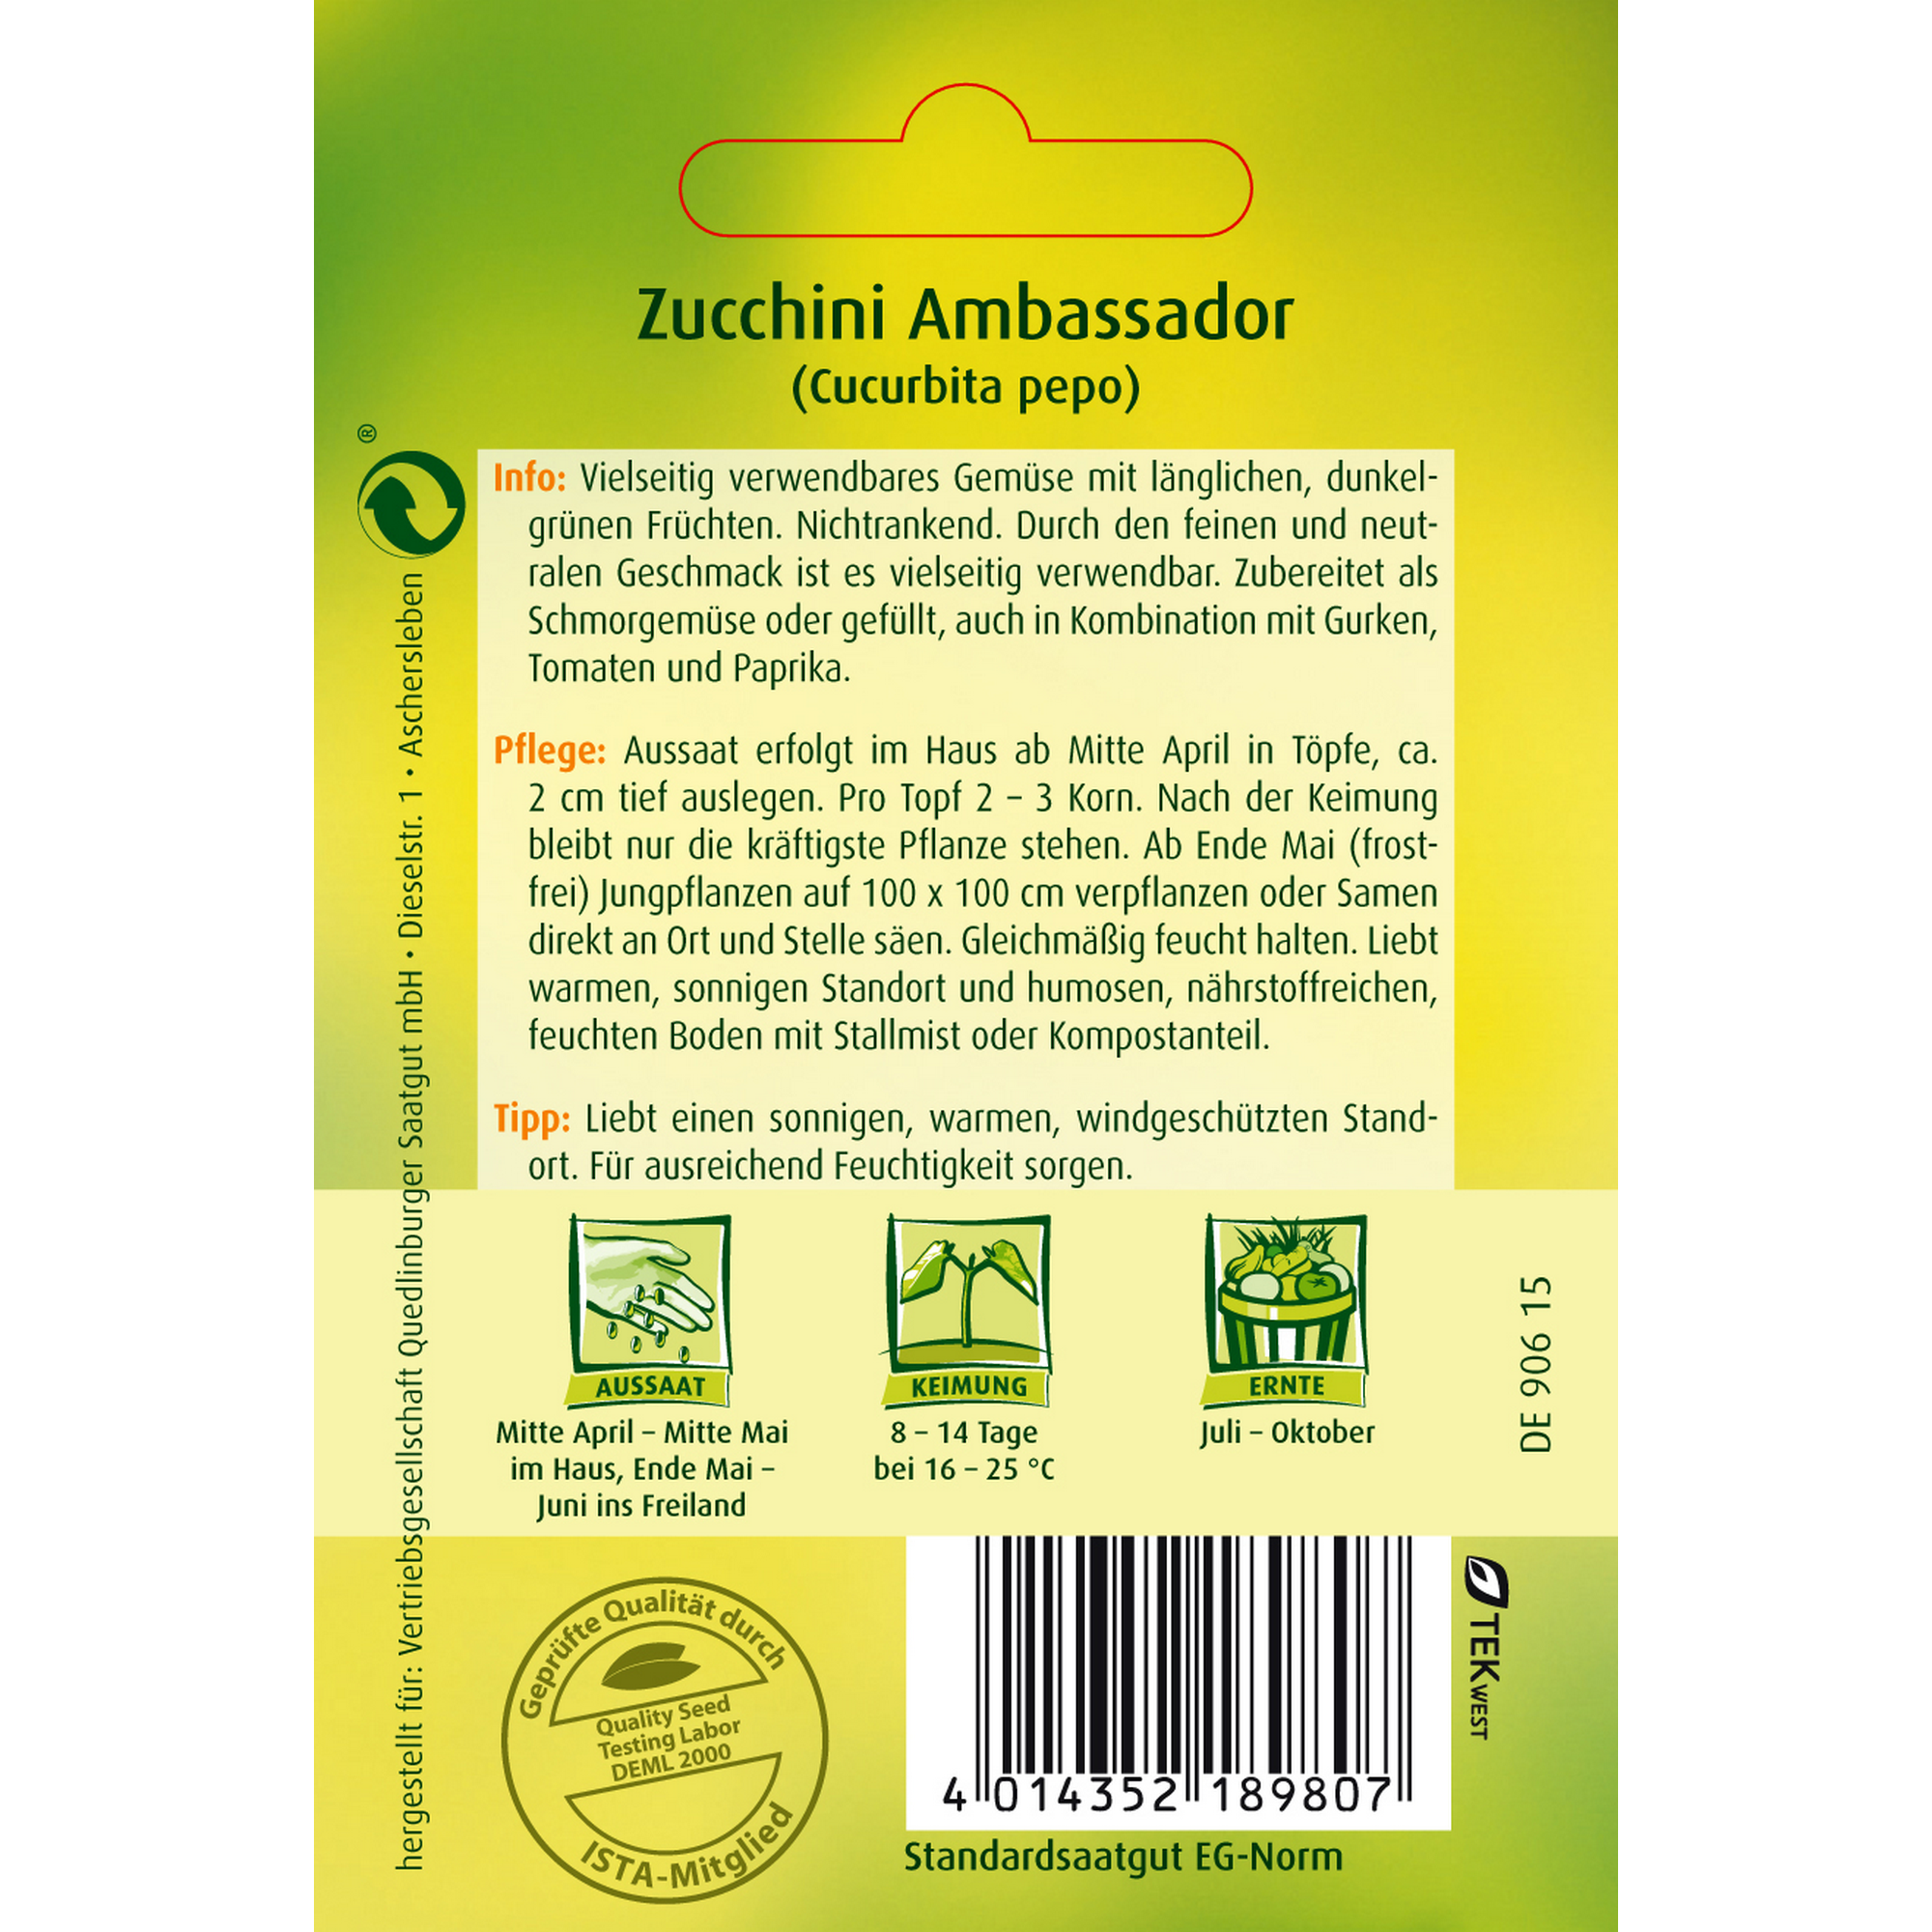 Zucchini 'Ambassador' + product picture